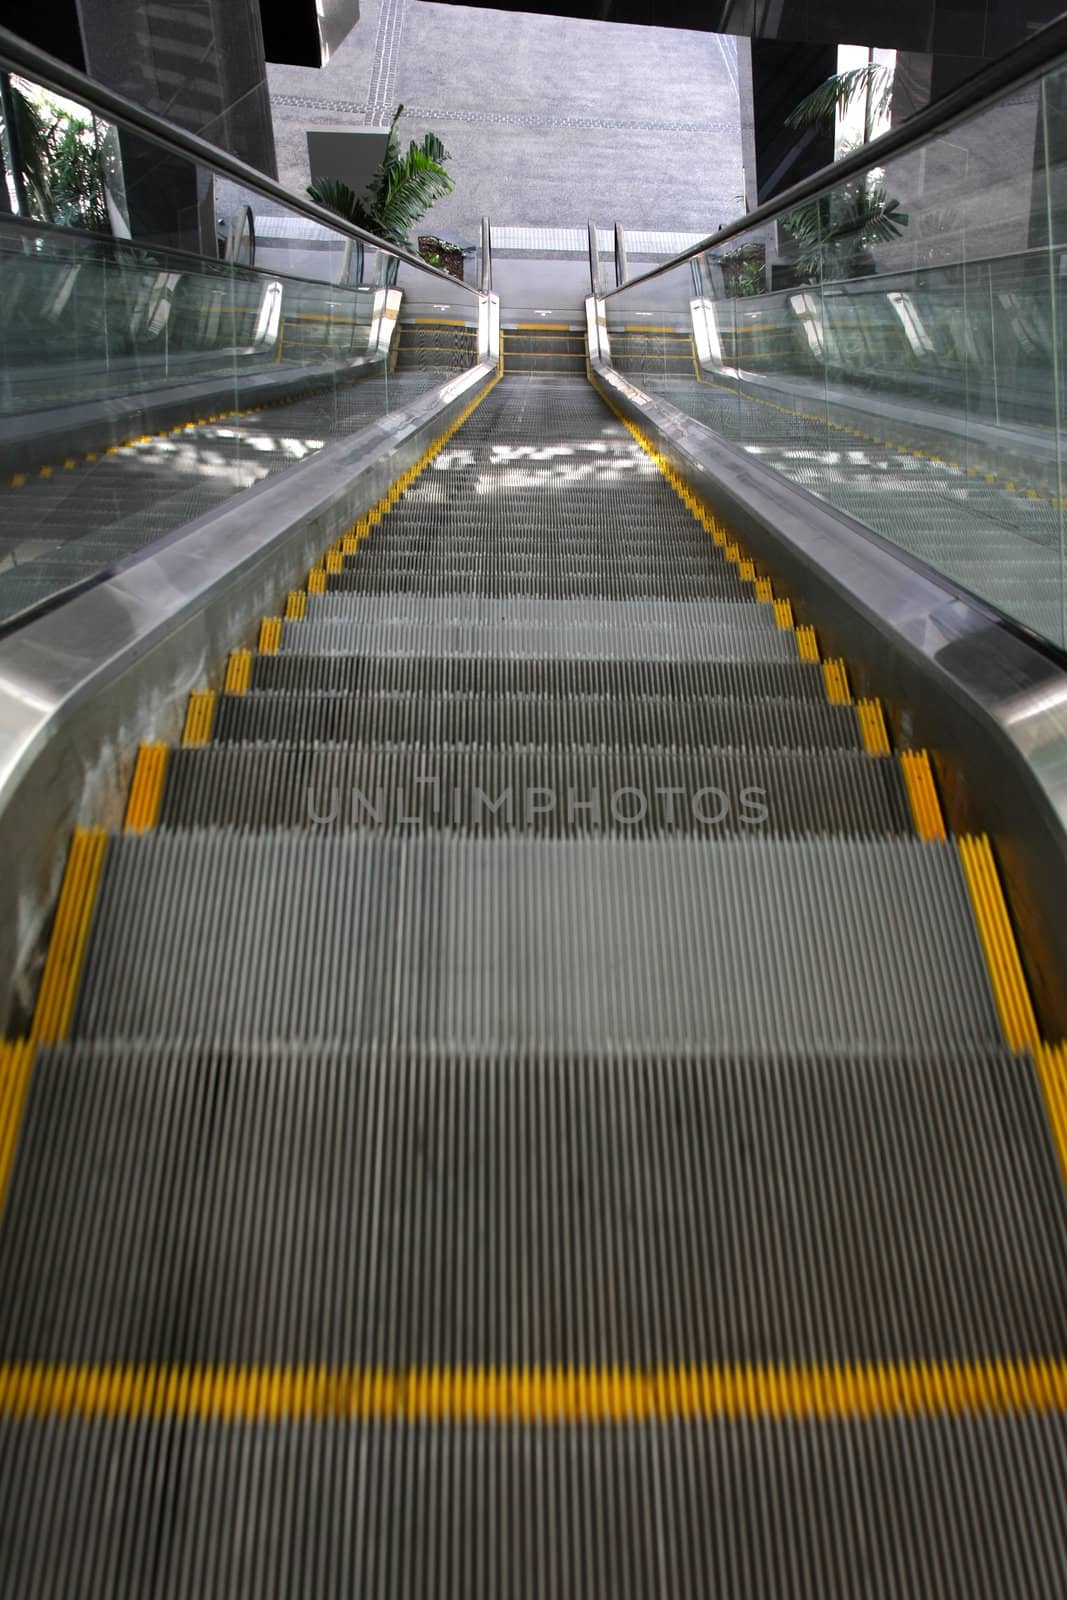 Steep escalator at an airport